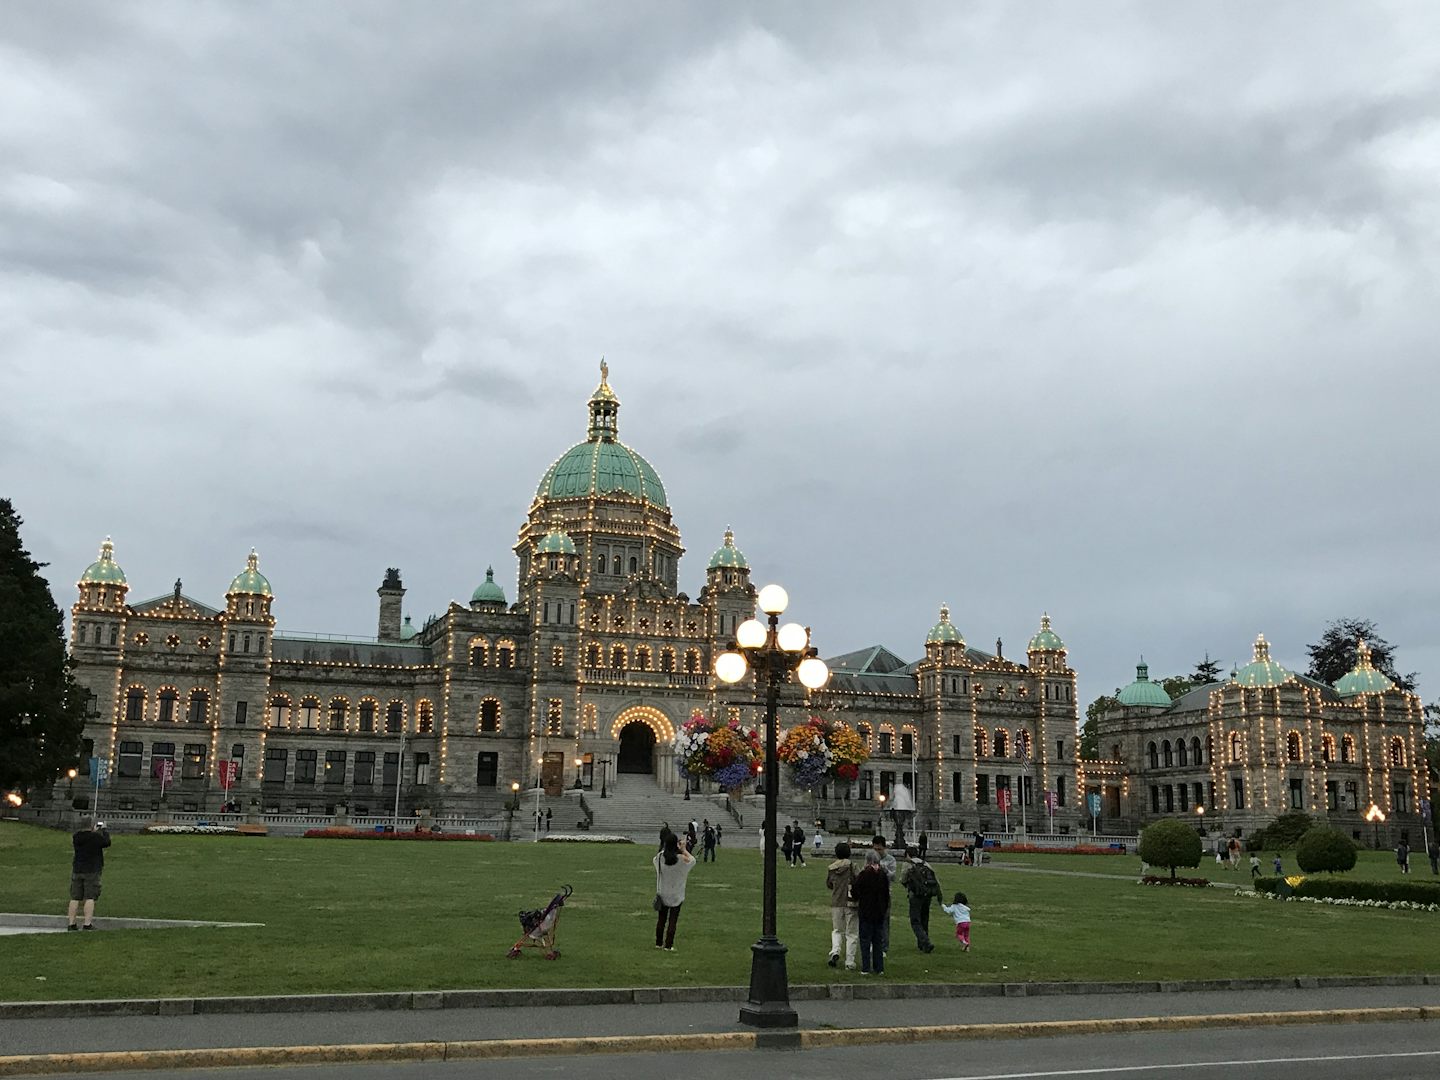 Parliament in Victoria, BC